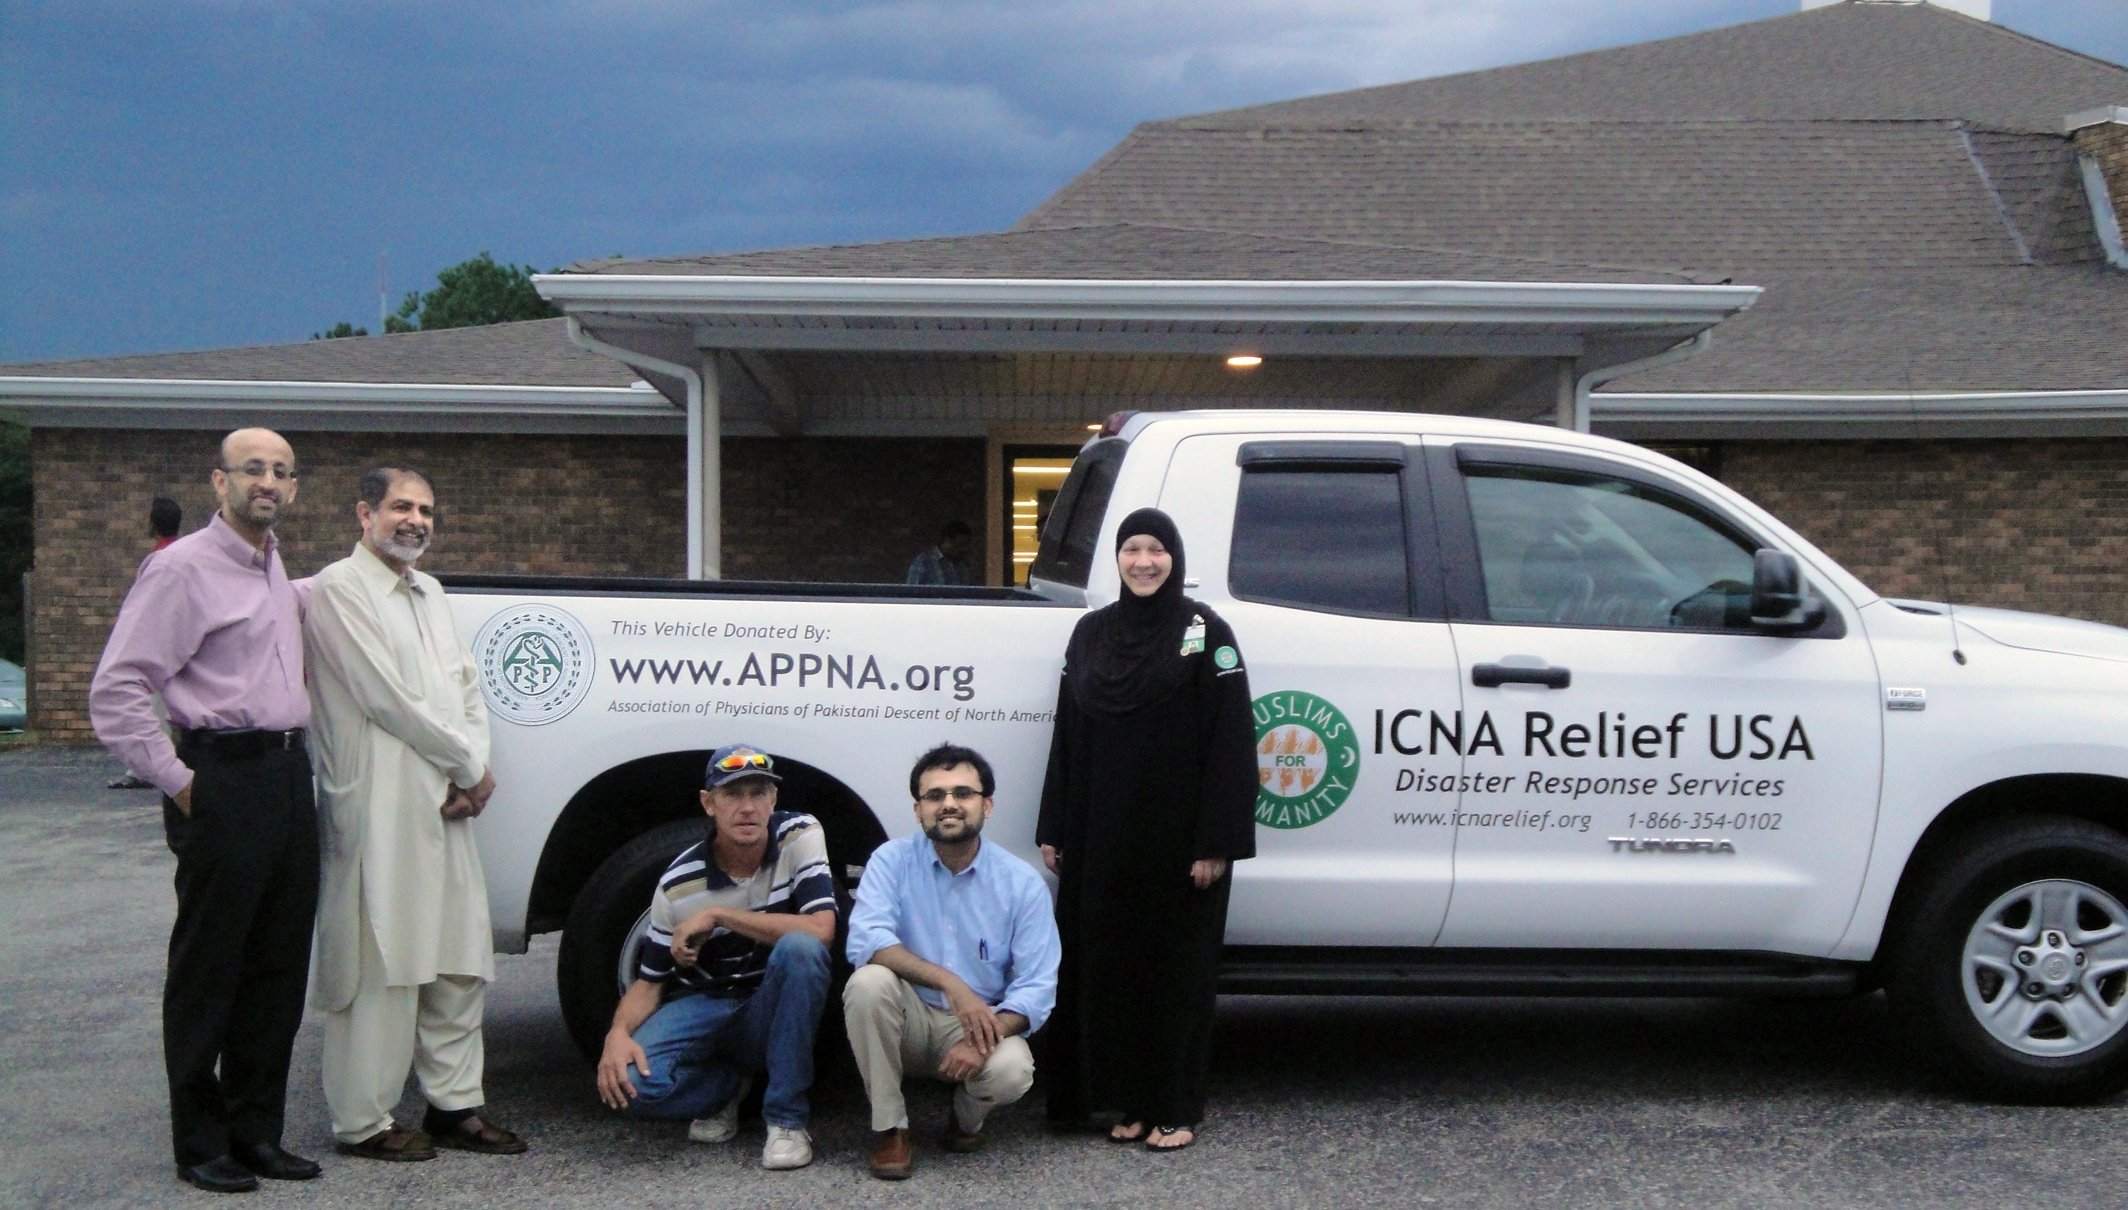 APPNA Donates van for 2011 Alabama Tornado Relief